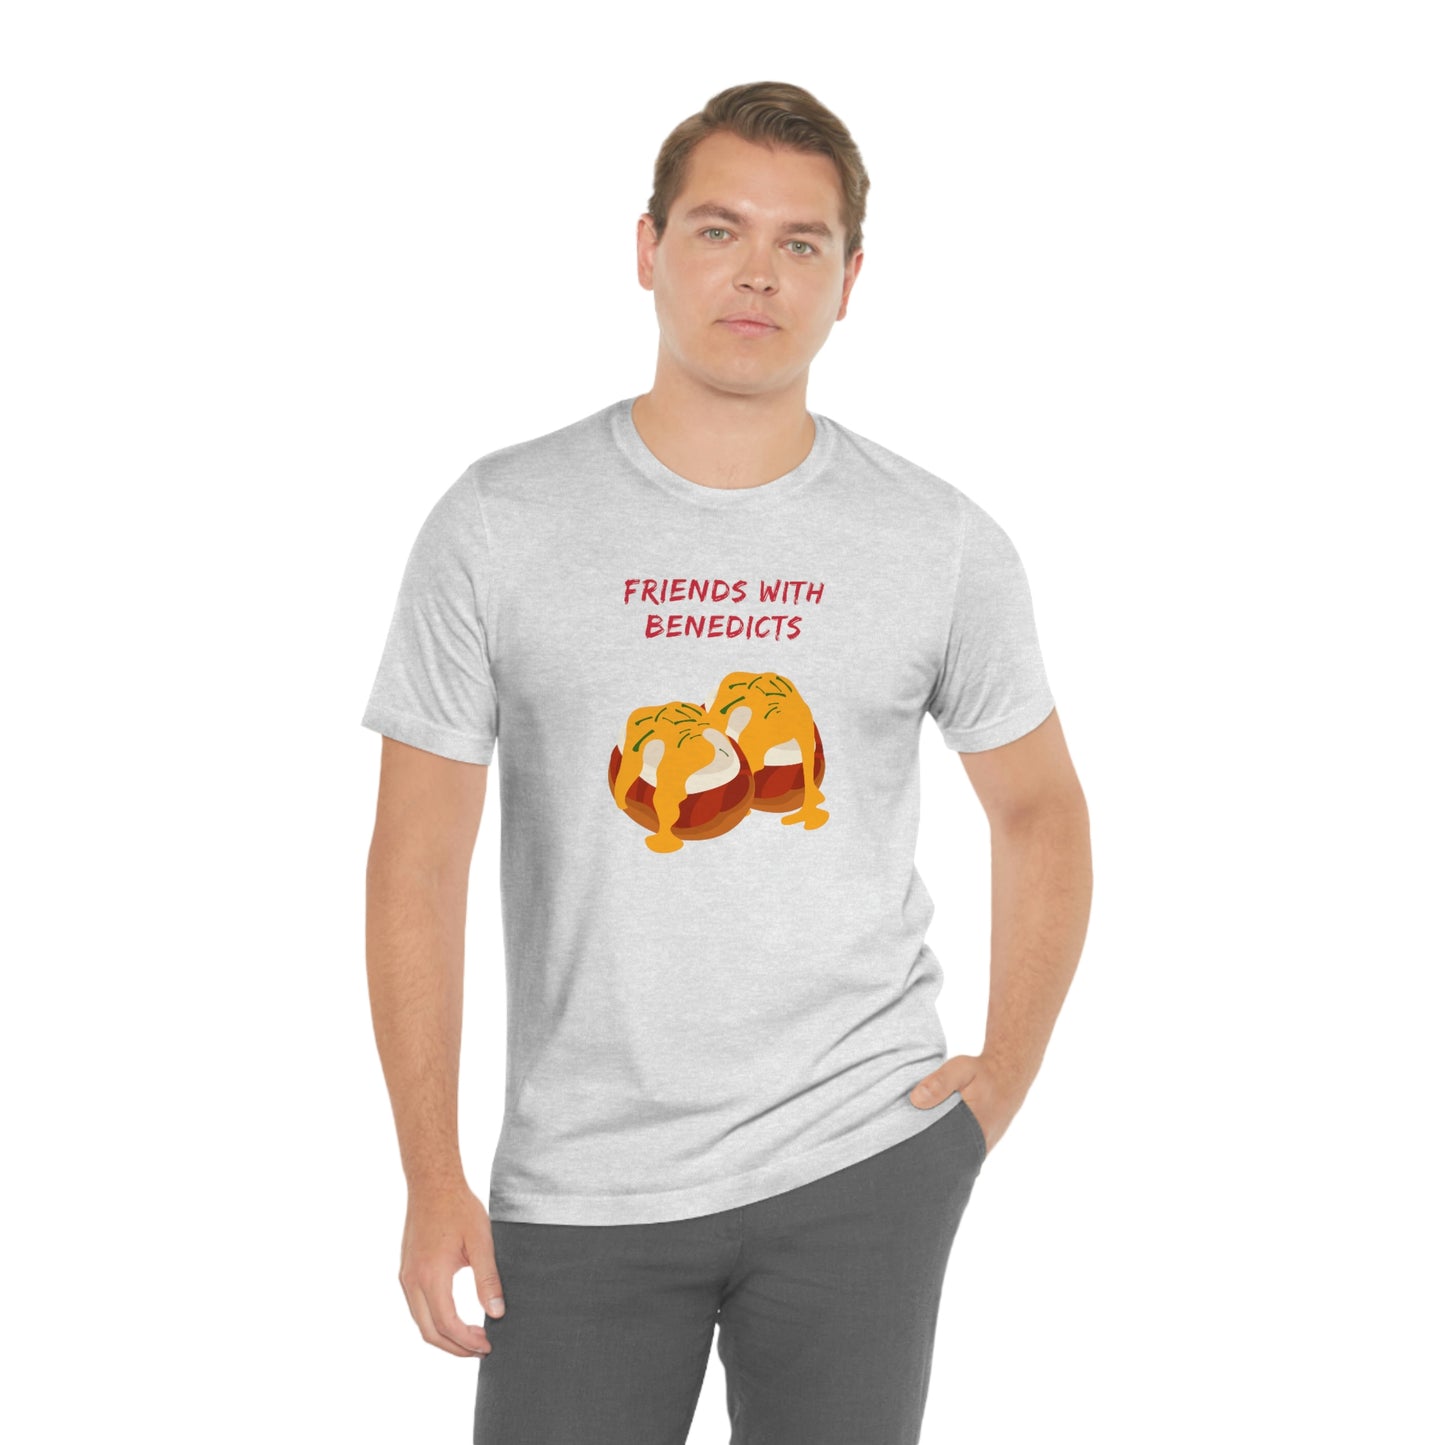 Friends with Benedicts - Men's Jersey Short Sleeve Tee - Men t shirts - Men funny tees